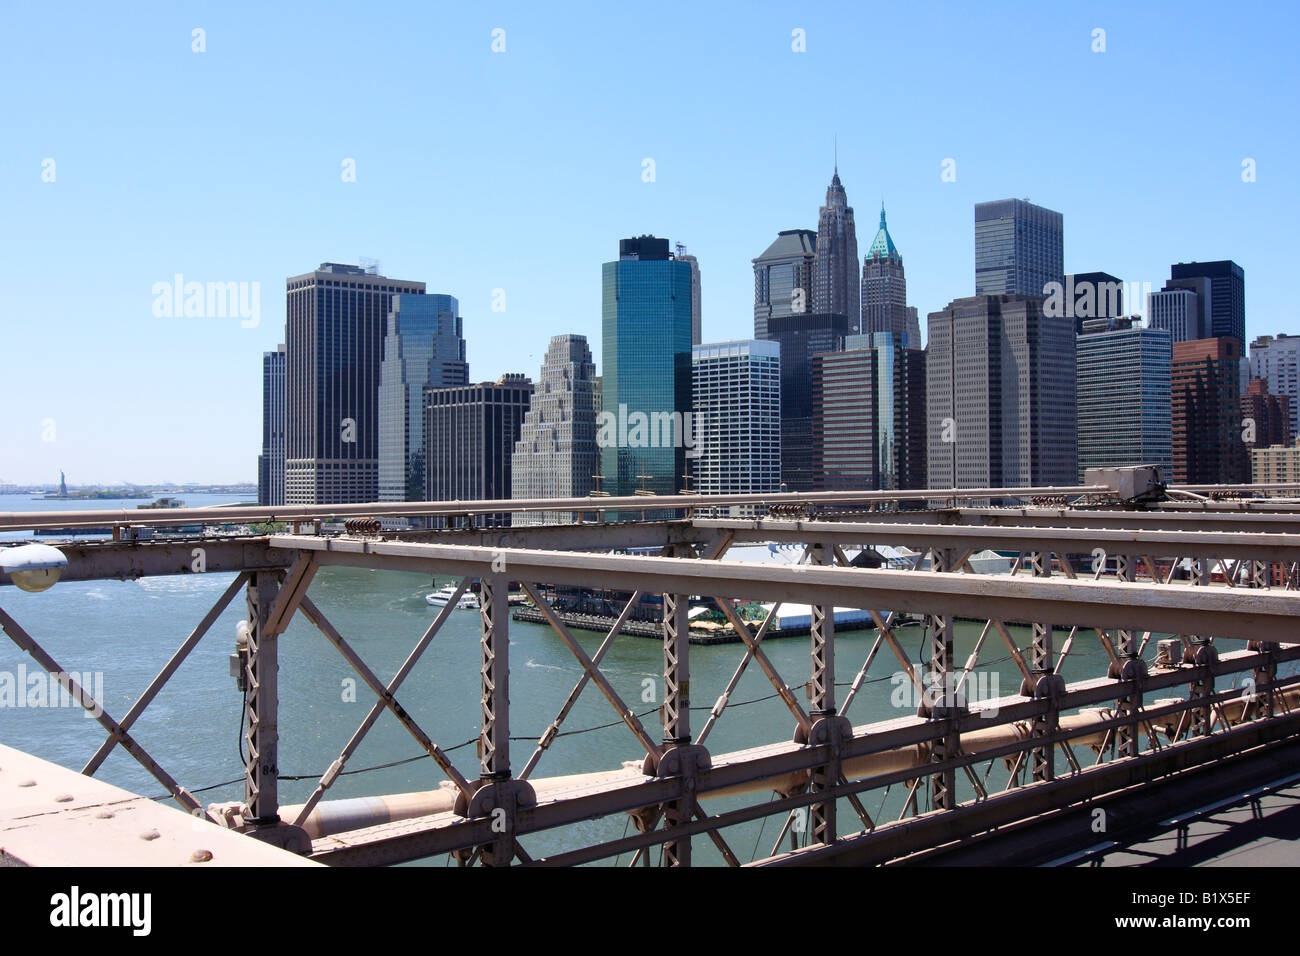 Brooklyn bridge walkway - New York City, USA Stock Photo